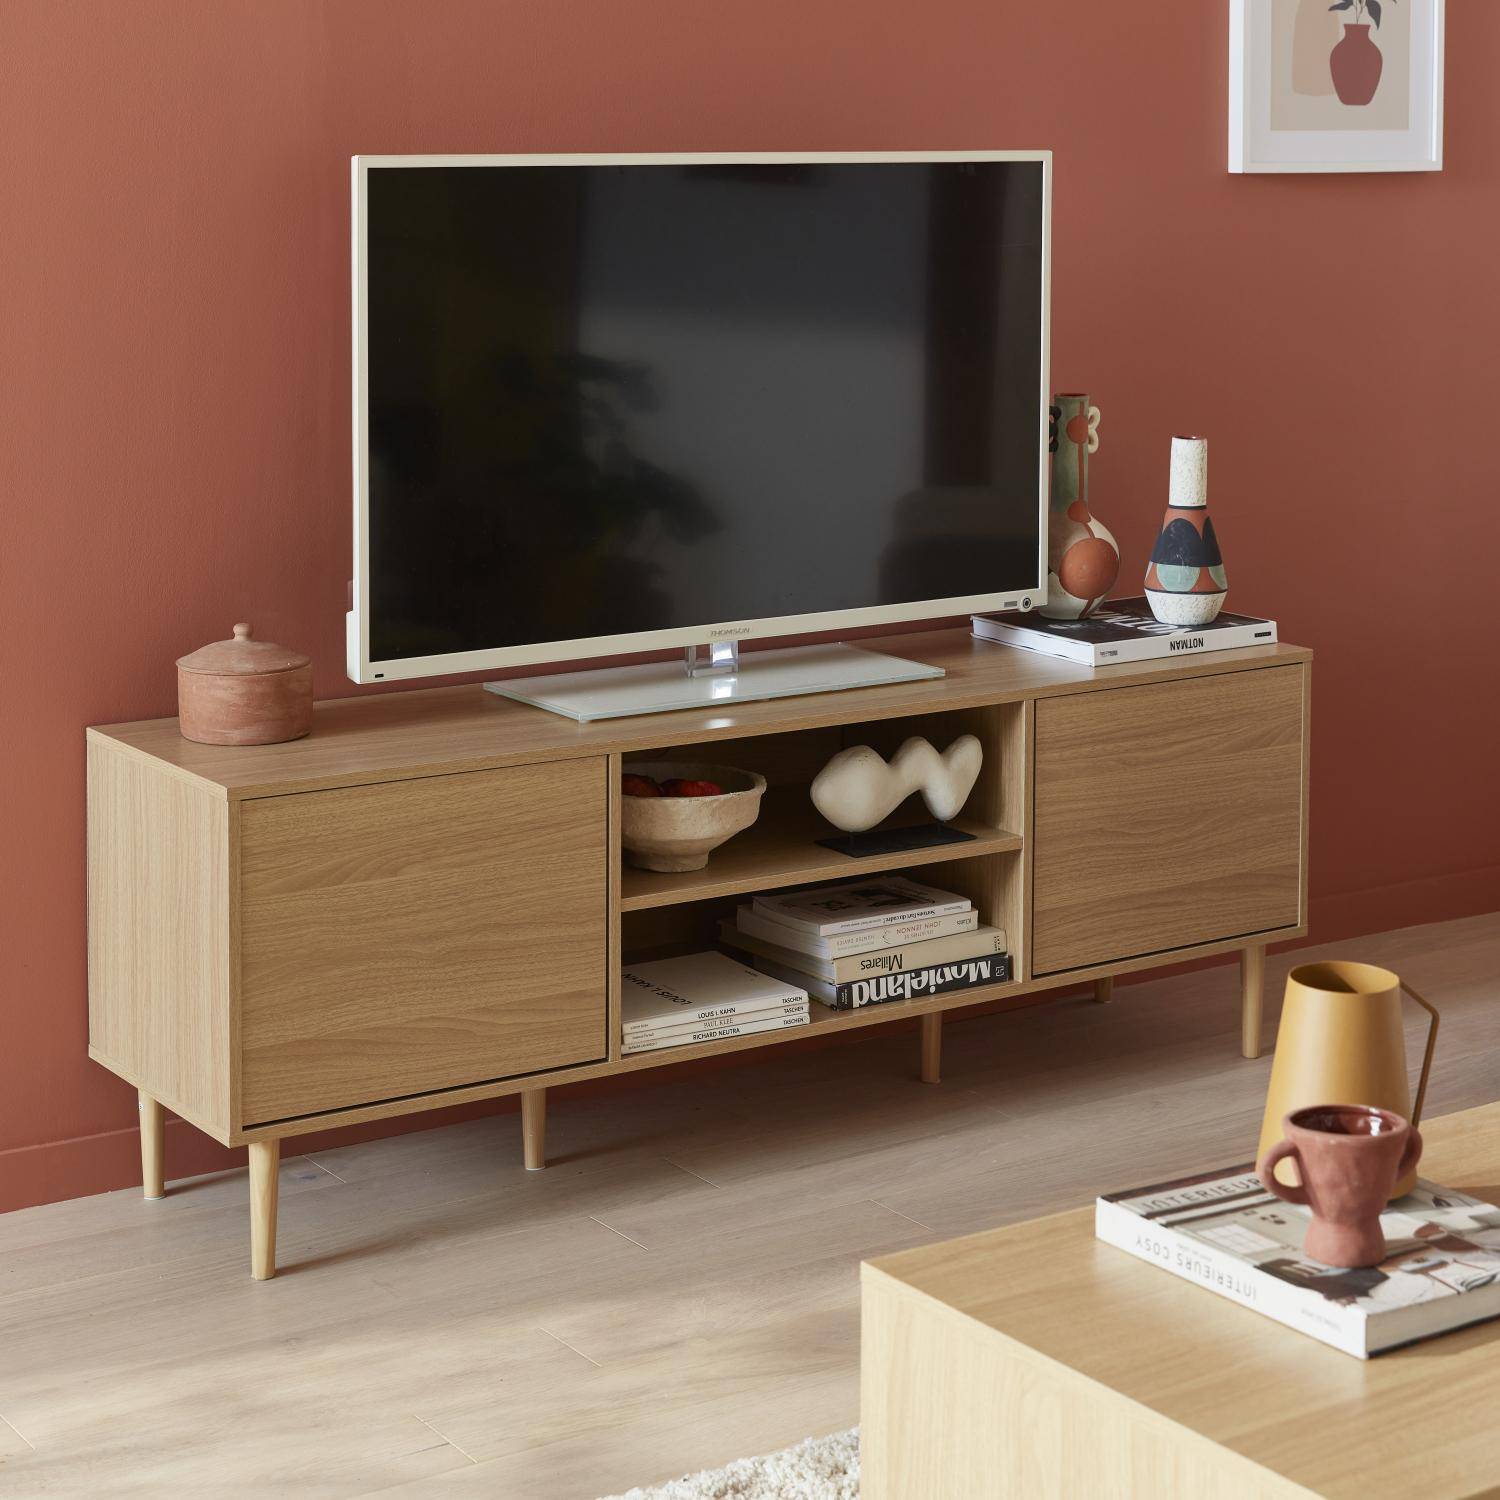 160cm Wood-Effect TV Stand – 2 Levels, 3 Shelves, 2 Doors Photo1